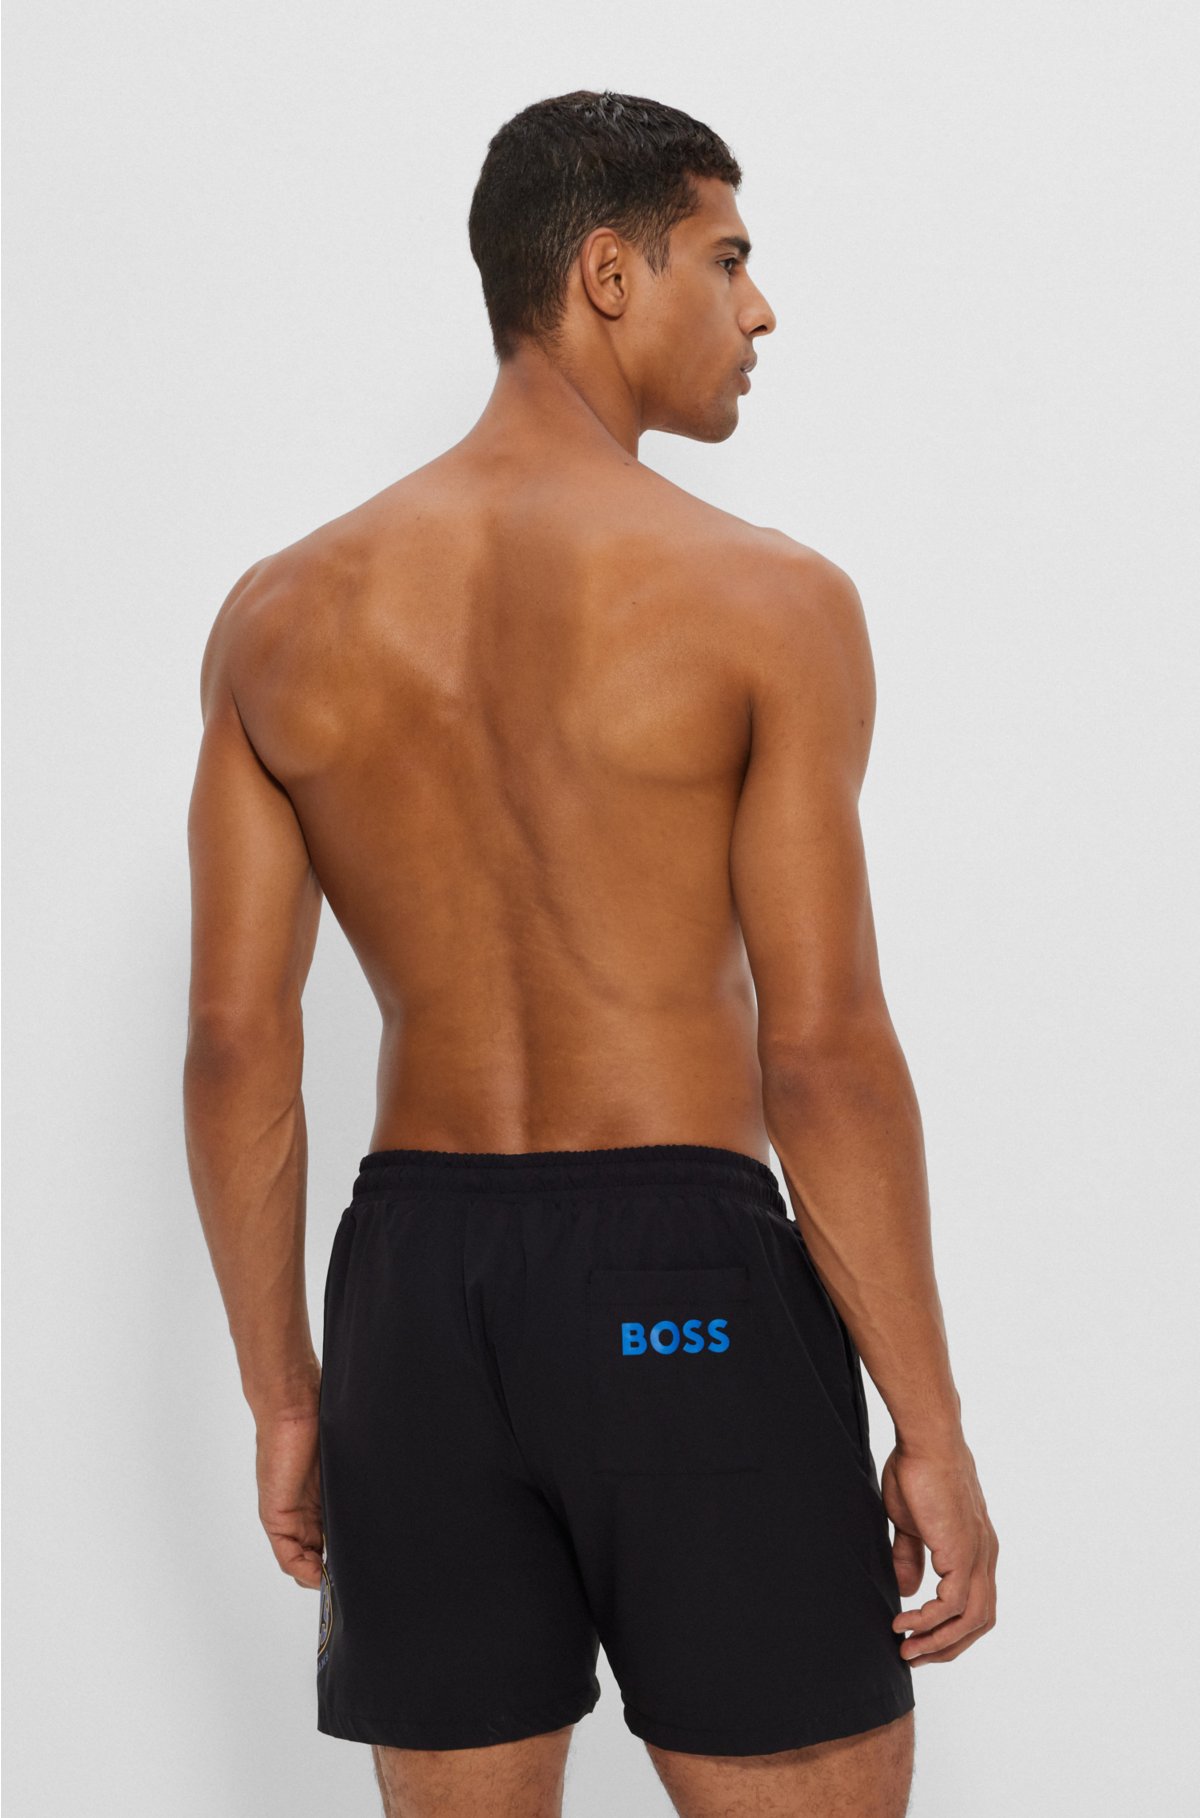 BOSS x NFL quick-dry swim shorts with collaborative branding, Rams